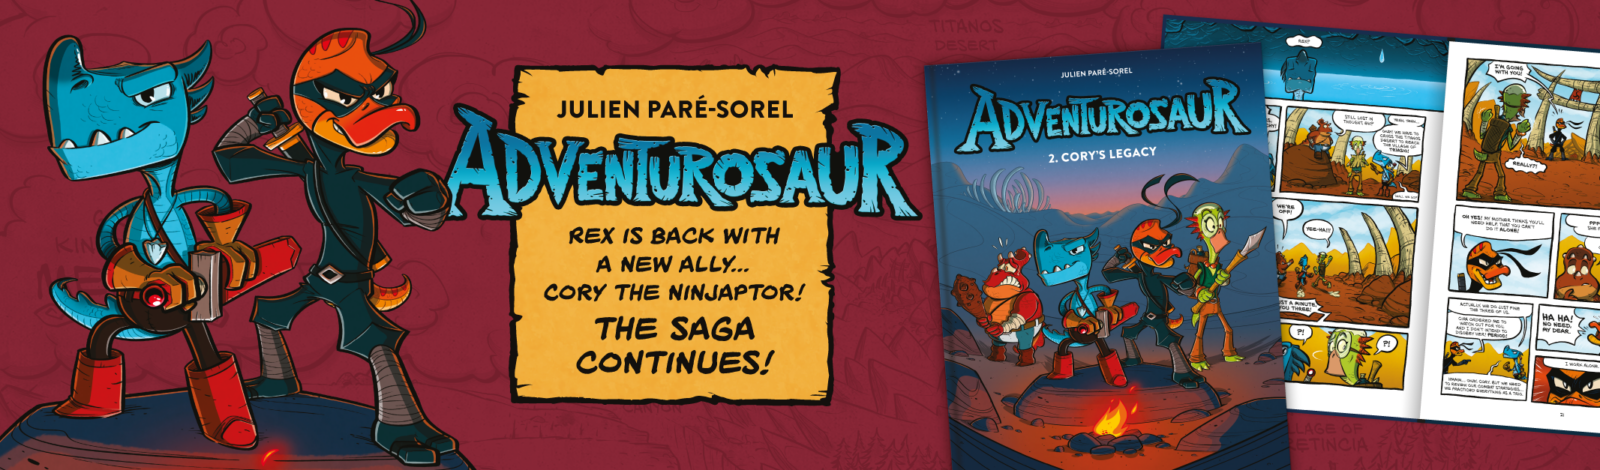 Adventurosaur, Volume 2 – Cory’s Legacy